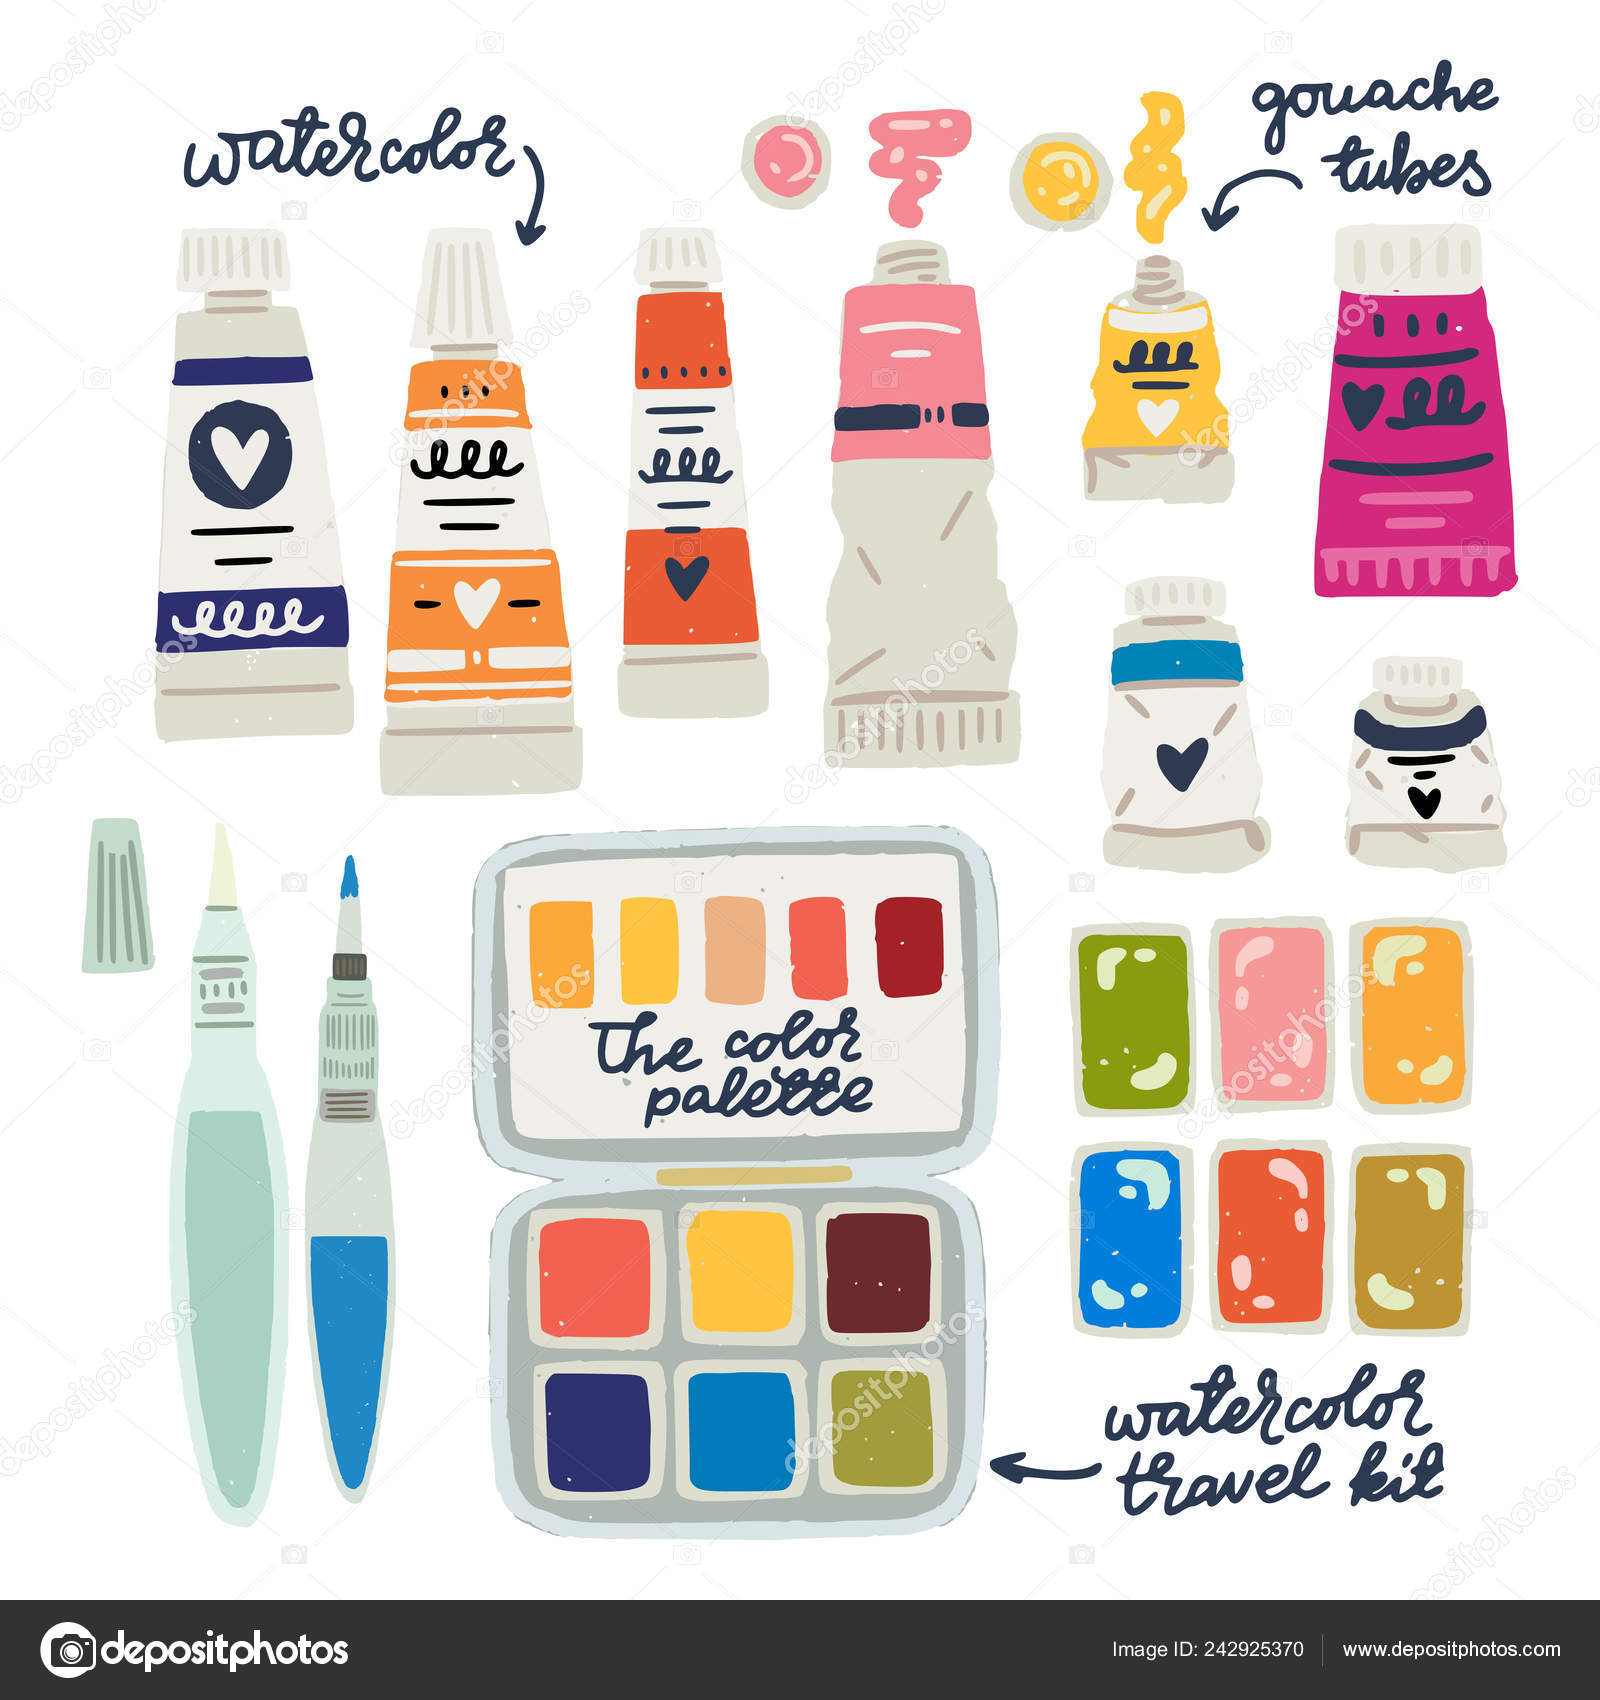 Travel watercolor set  Watercolor supplies, Travel art kit